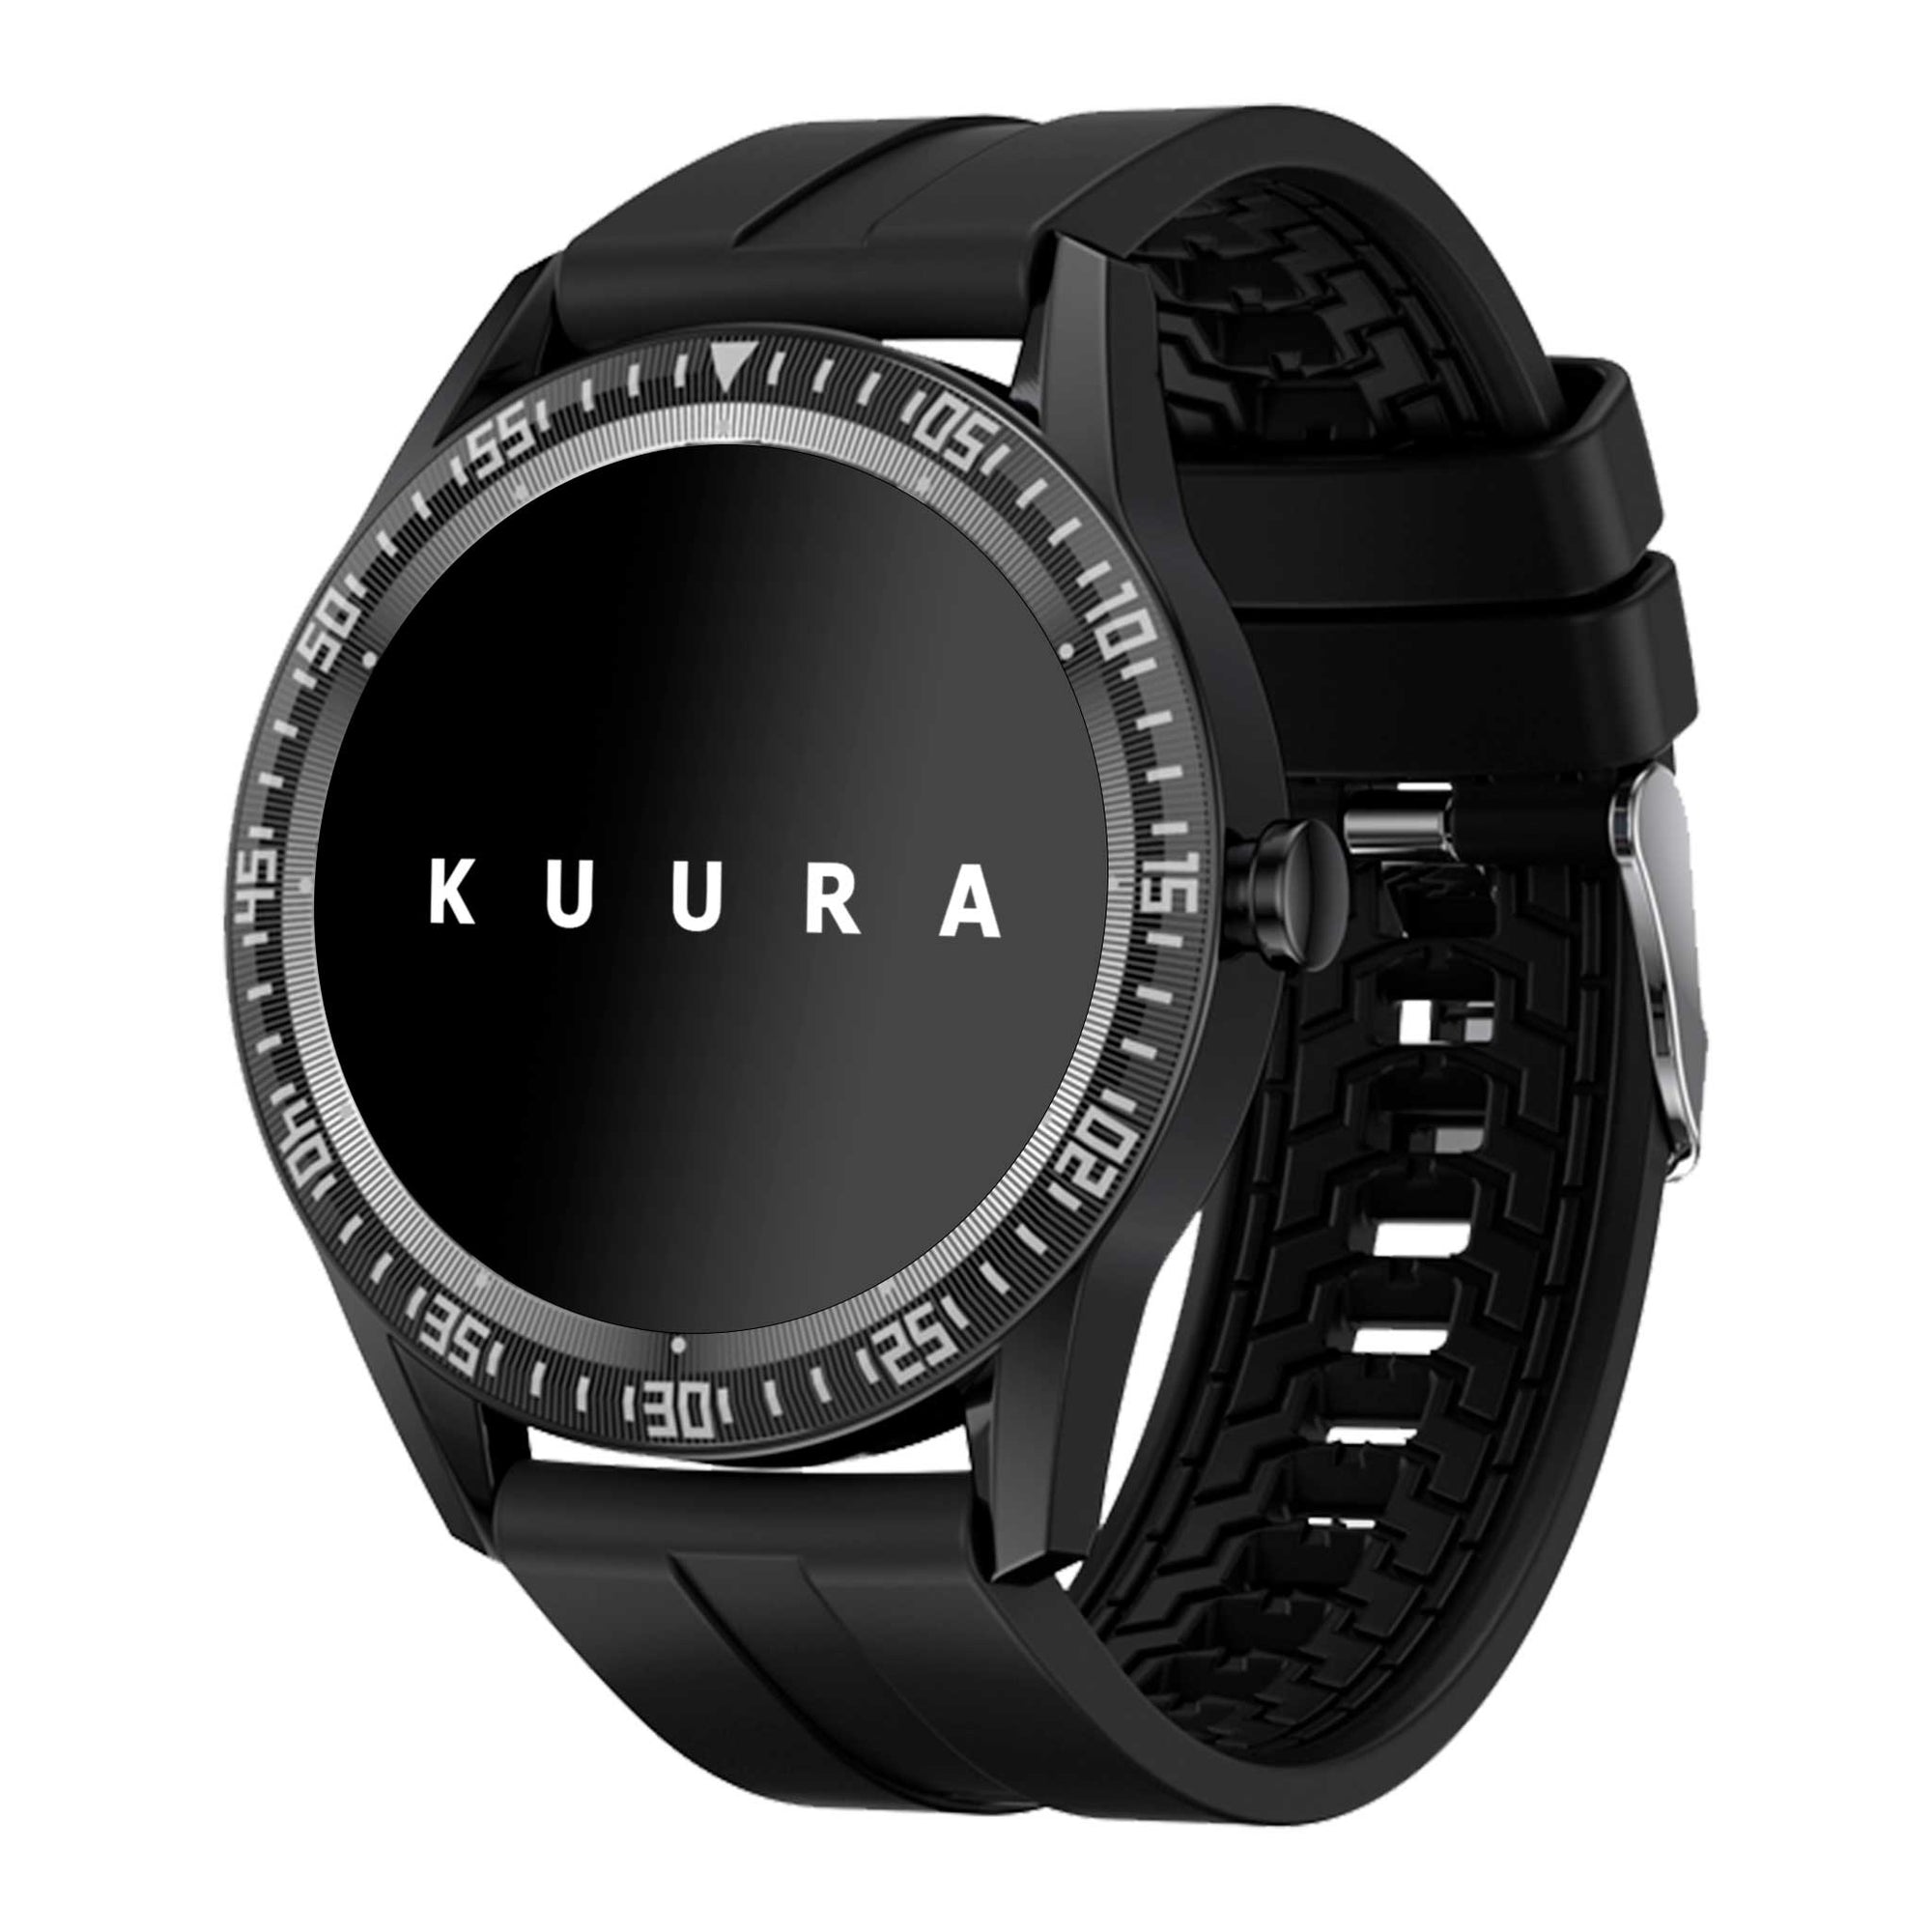 Cмарт часы Kuura Sport S7